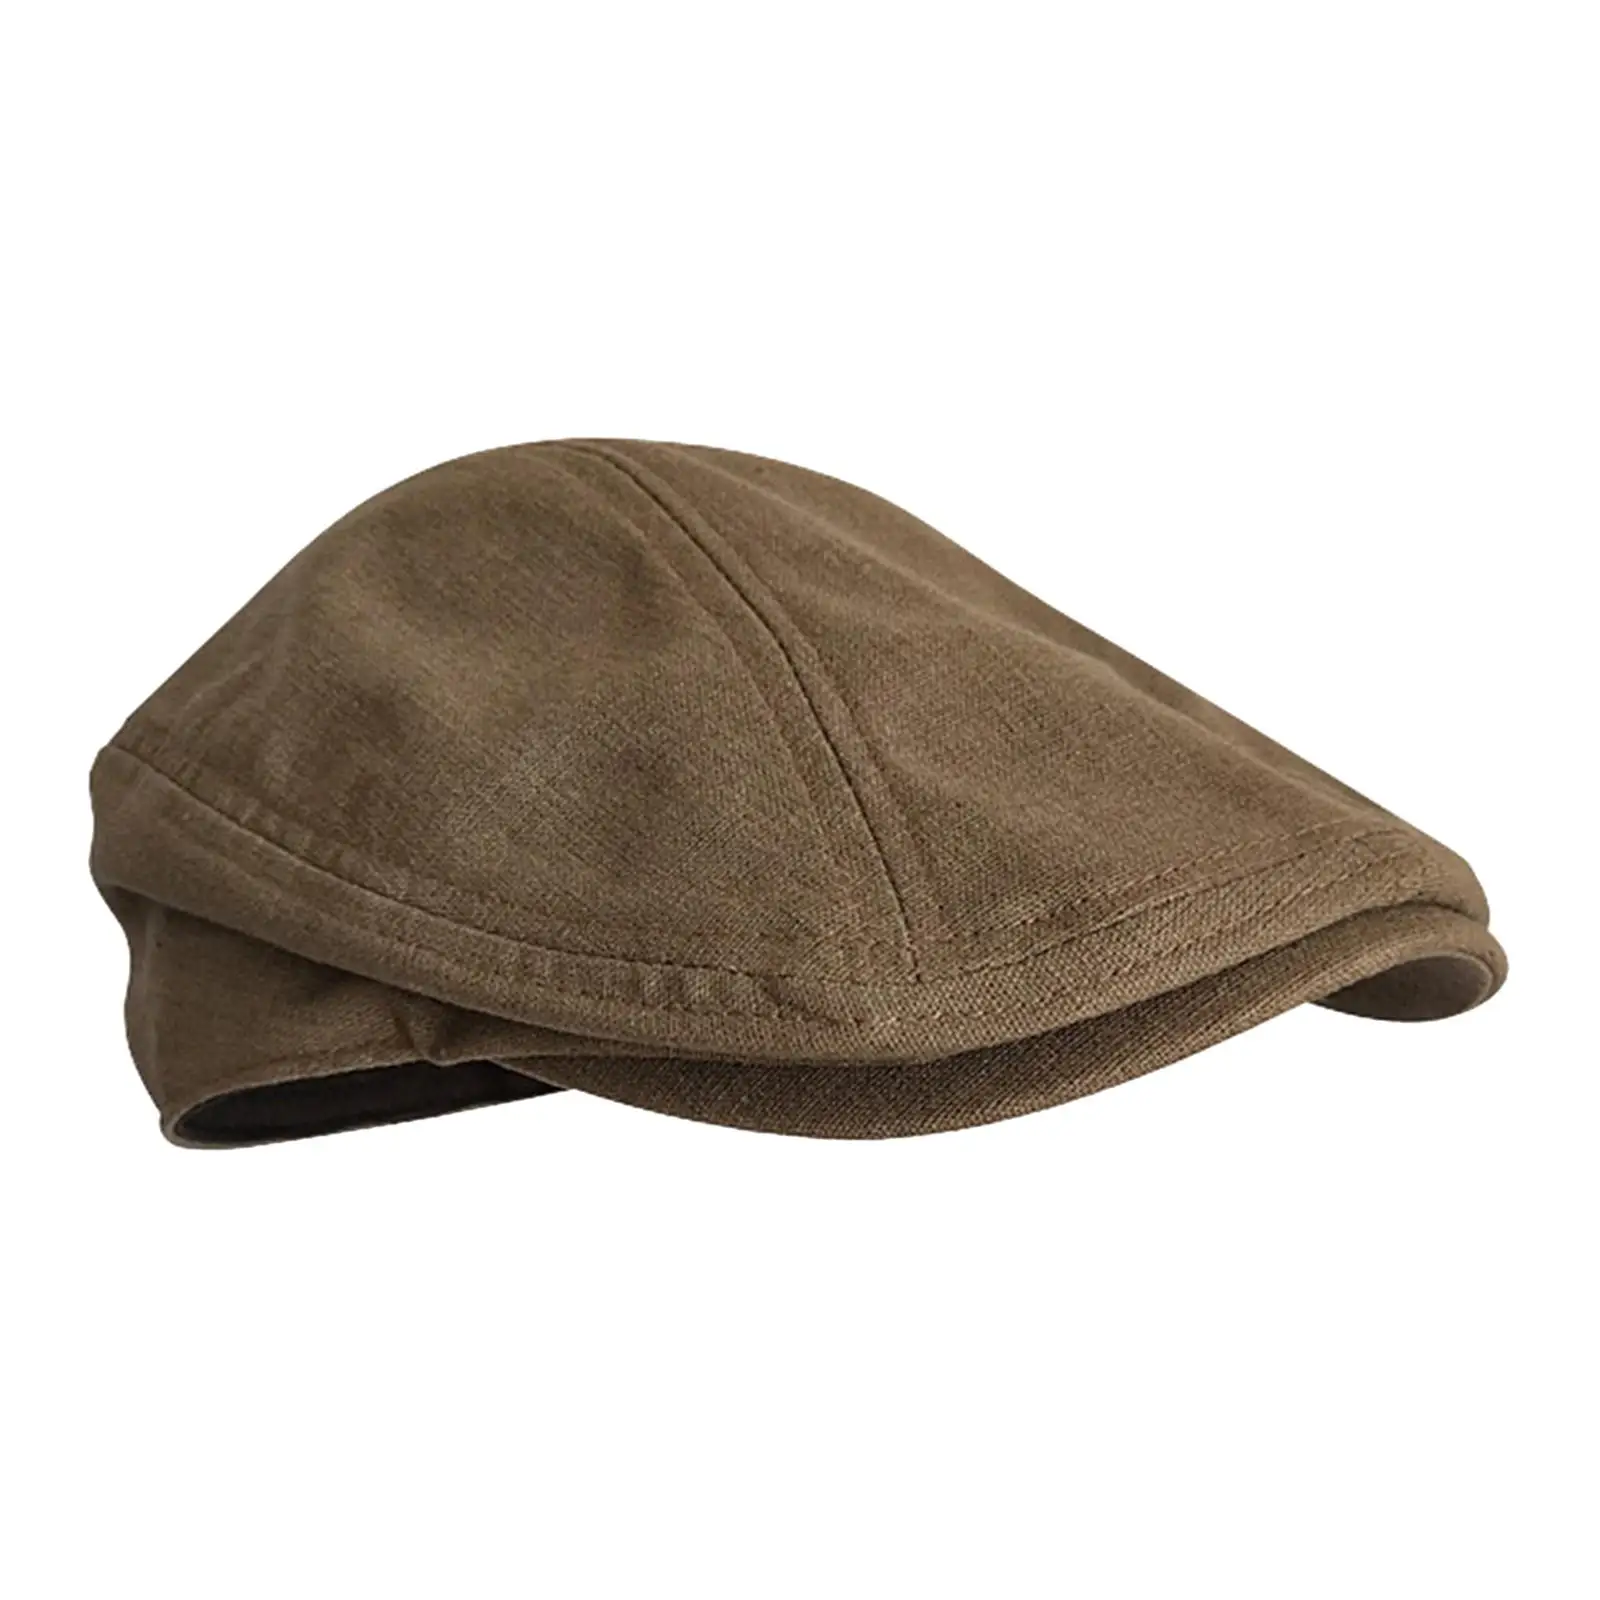 Autumn Winter Berets Hats, Retro Style Newsboy Hat, Breathable Hat for Women Men